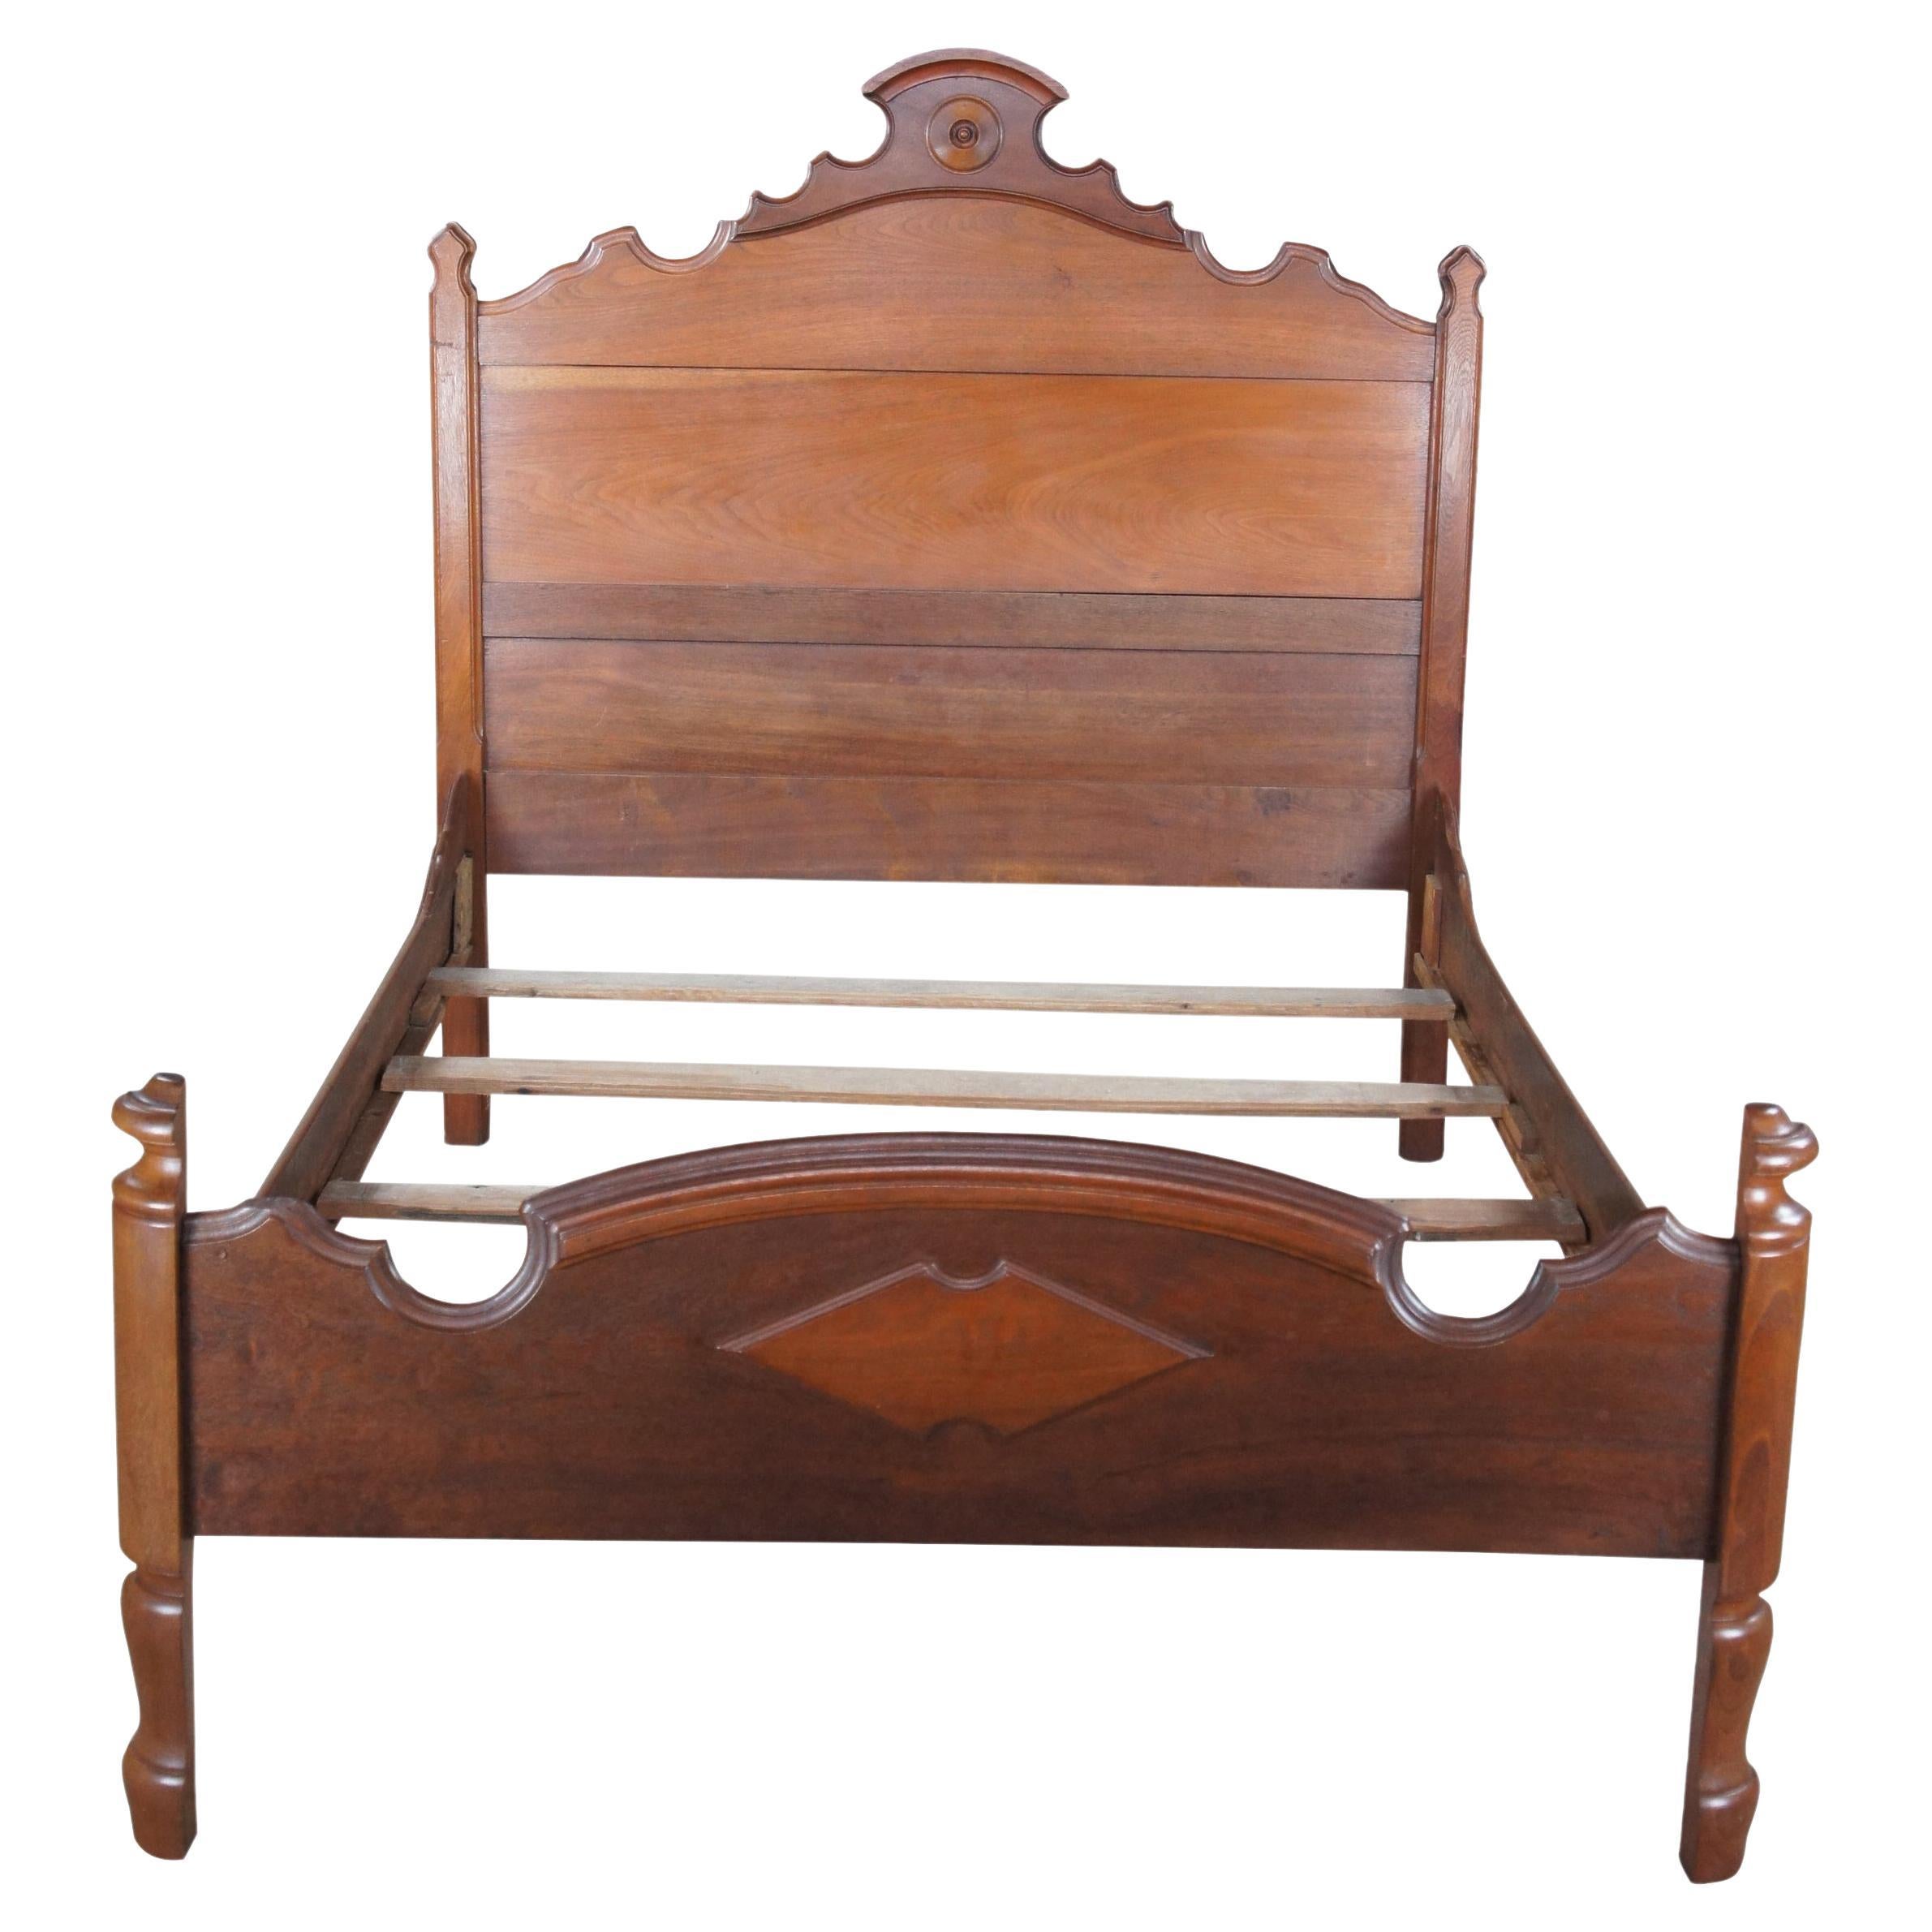 Antique 19th Century Victorian Eastlake Carved Walnut Custom Bed Frame